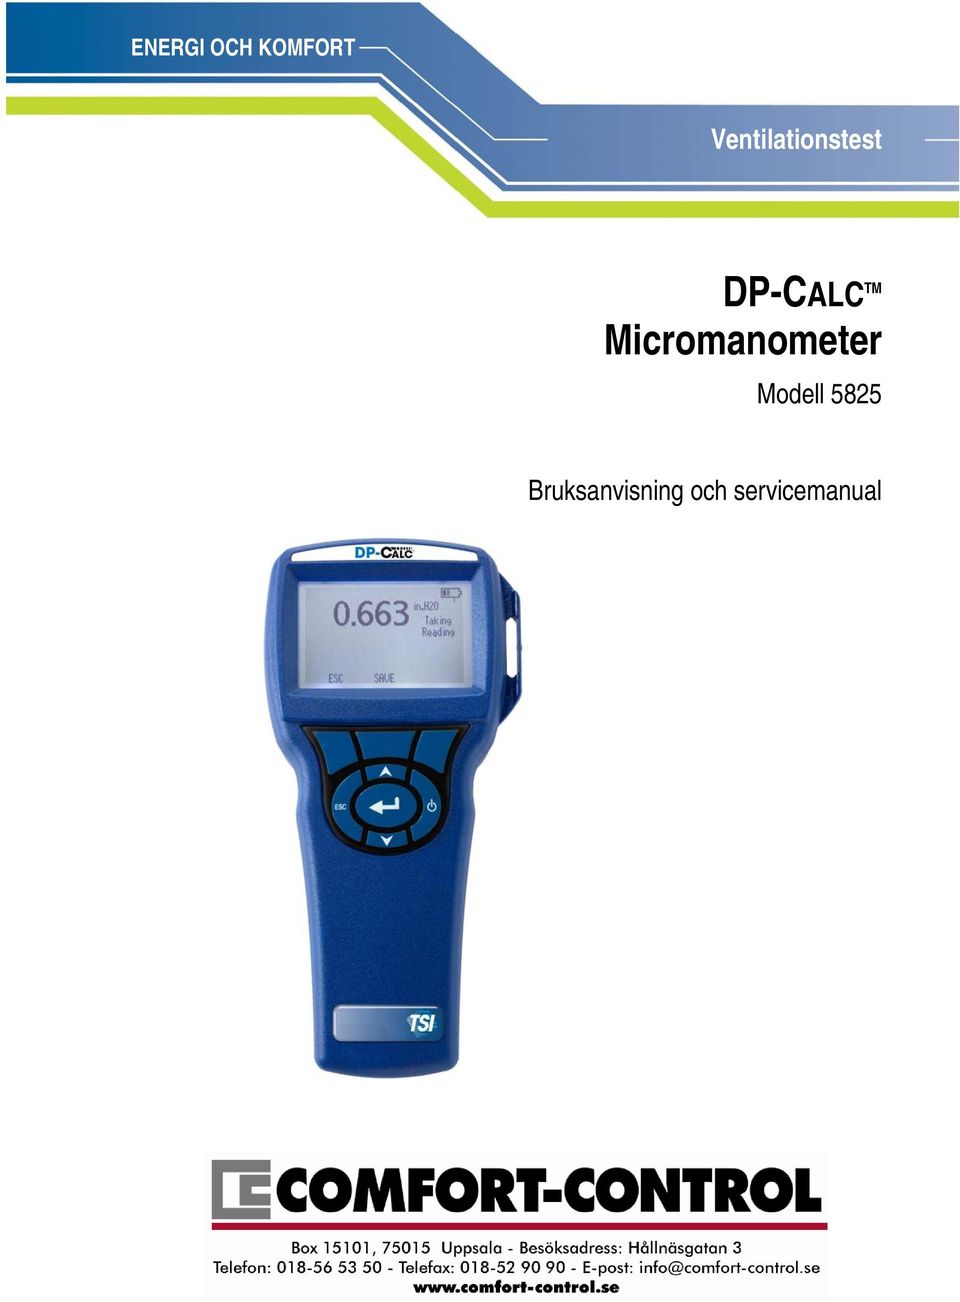 TM Micromanometer Modell